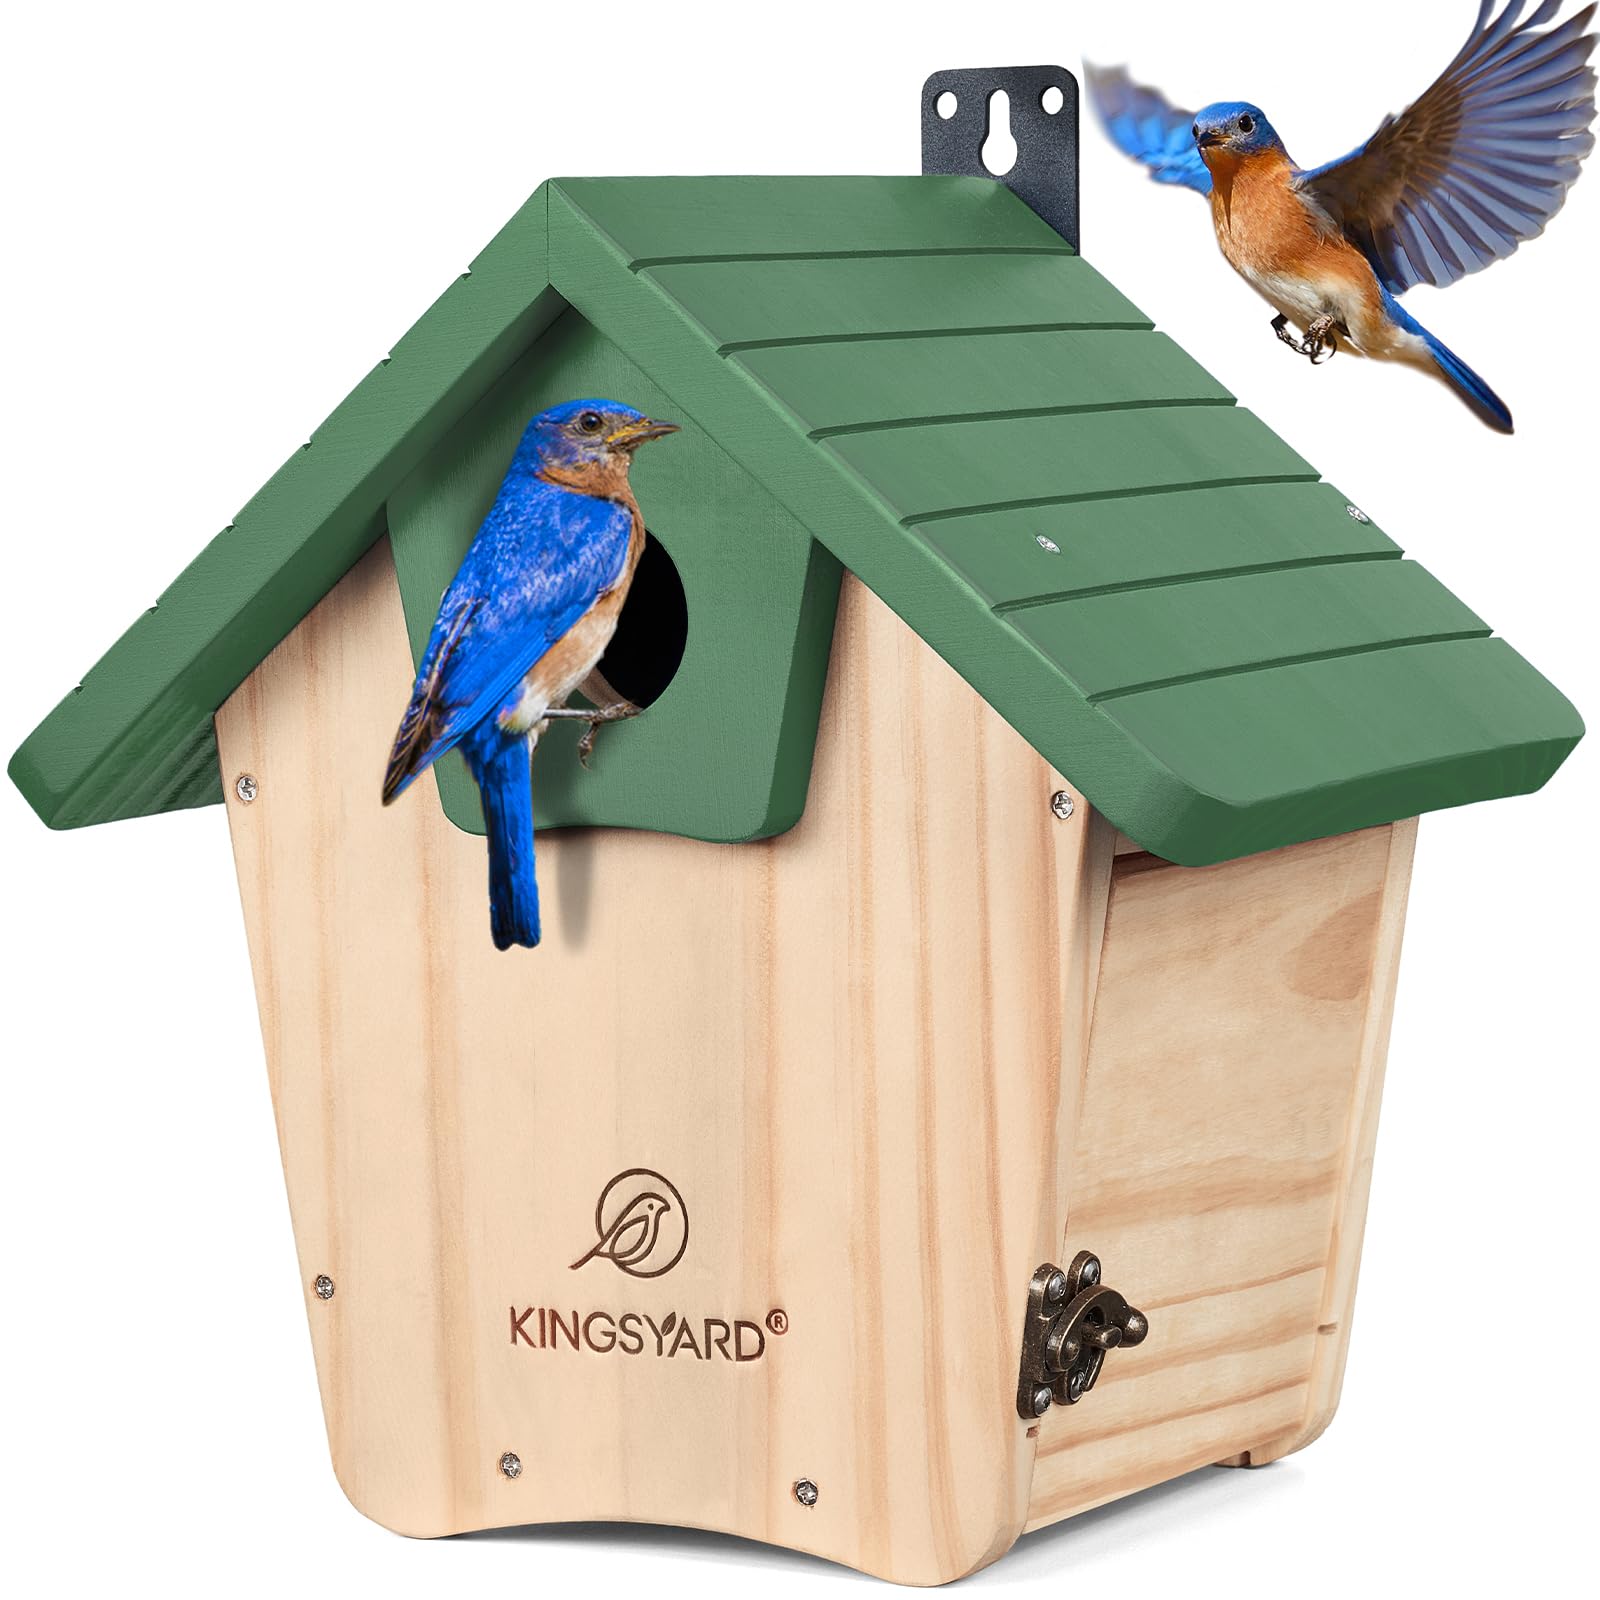 Kingsyard Wooden Bluebird House, Bird House with Predator Guard, Nesting Box Birdhouse for Outside Wild Bird Watching, Green